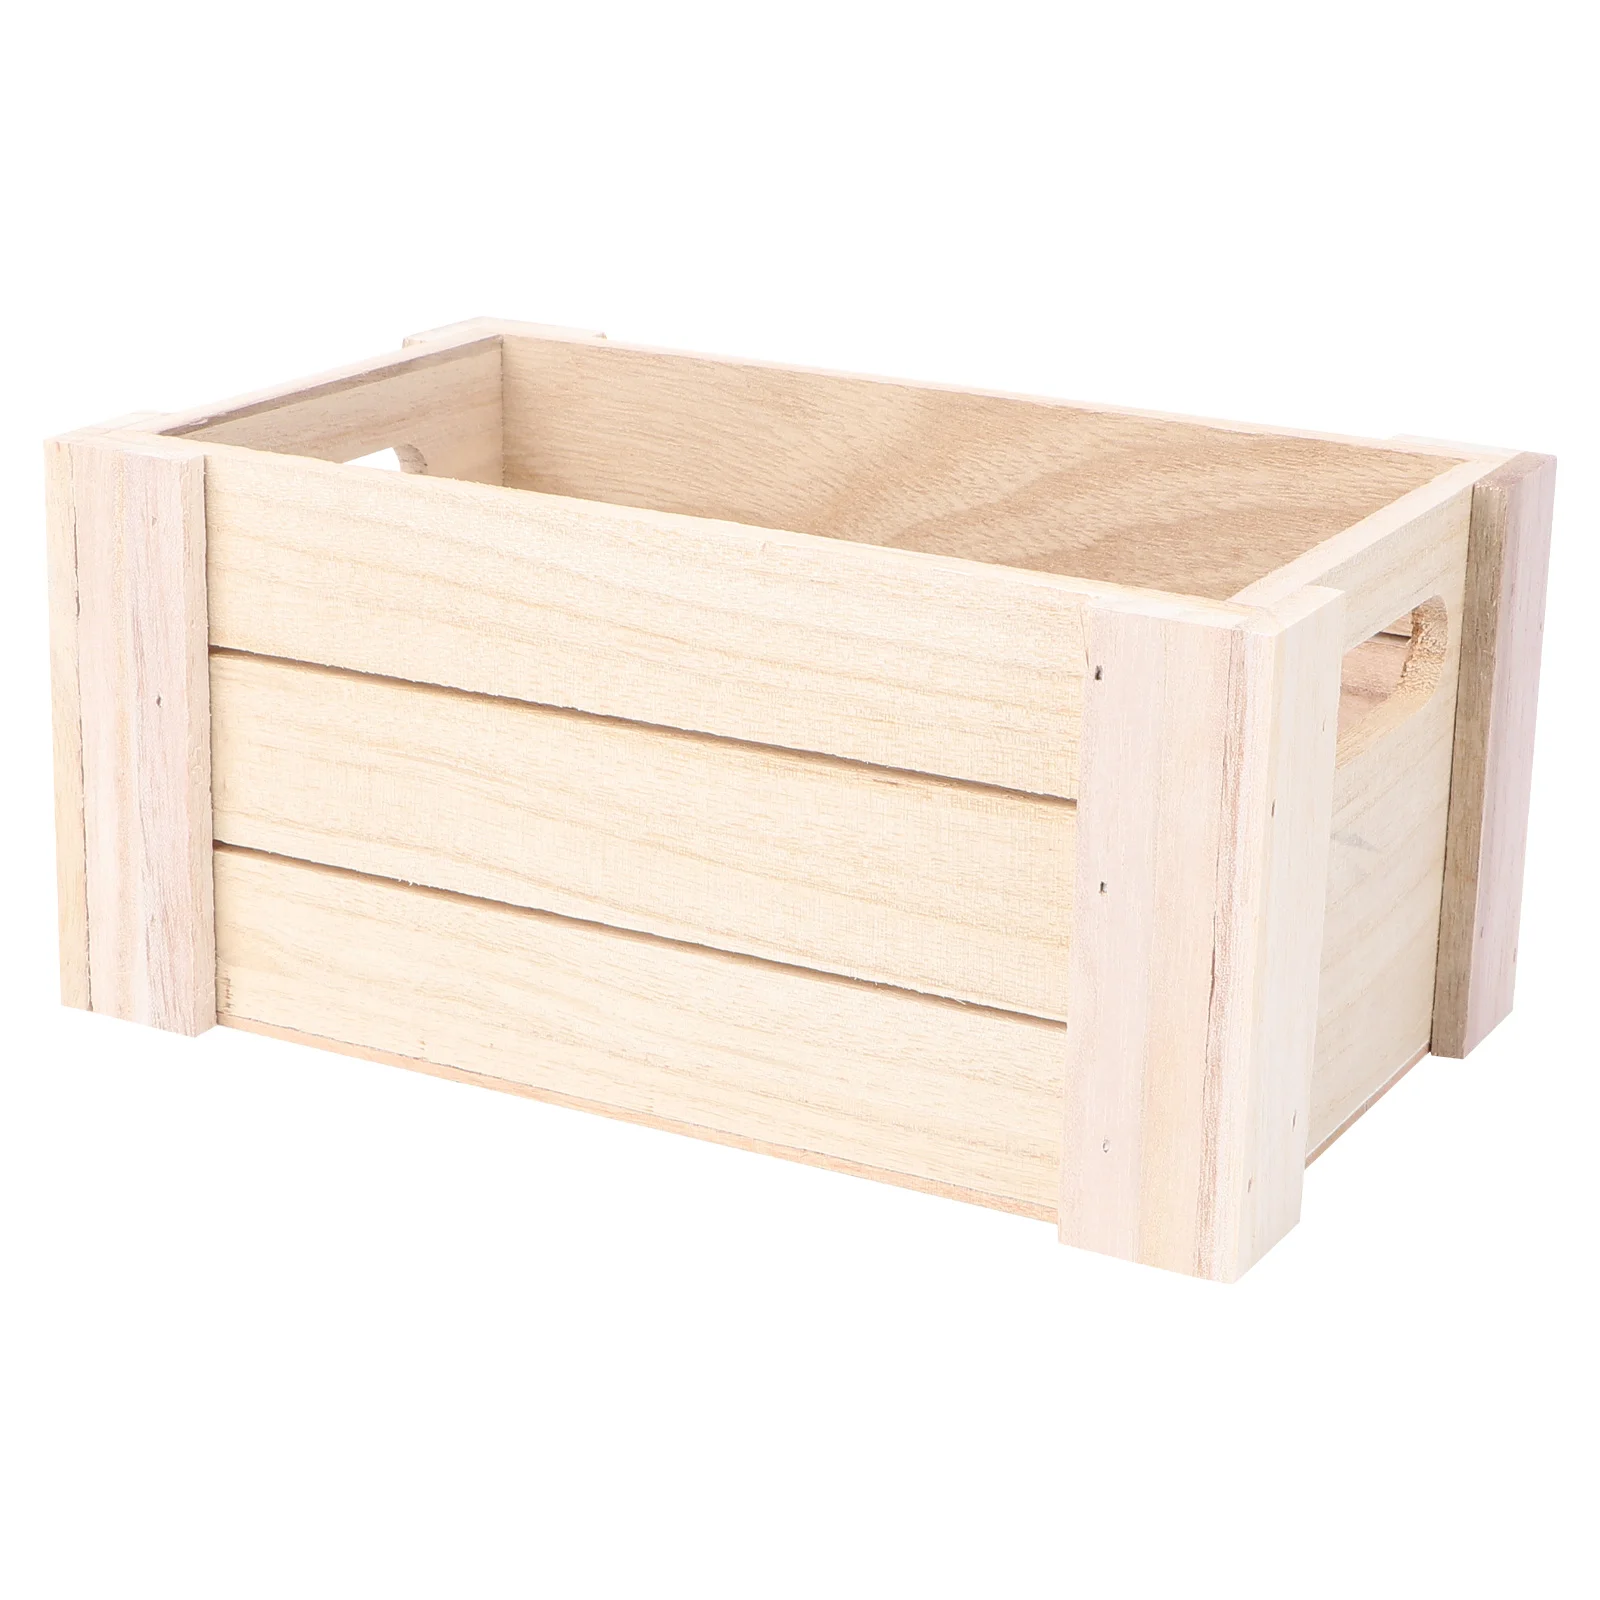 

Wood Nesting Storage Crates Handle Rustic Decorative Wood Crates Farmhouse Basket Distressed Storage Container Bin Desk